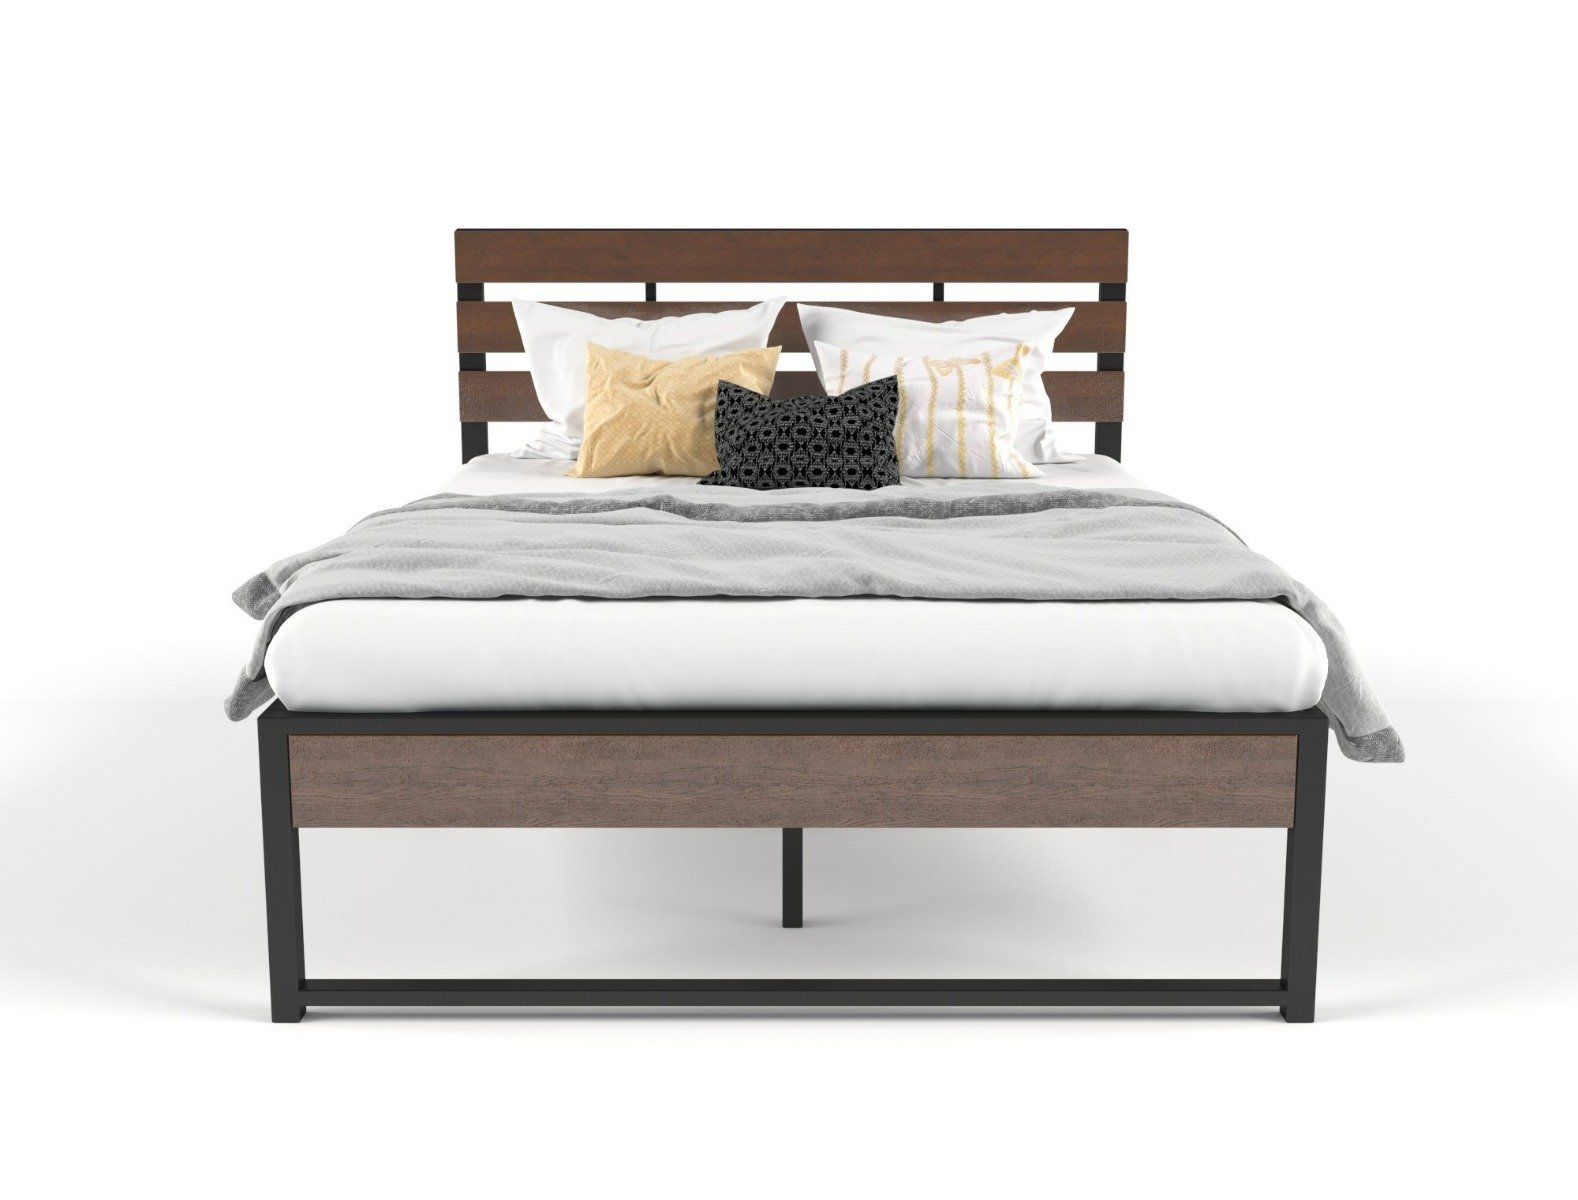 Bed Frame Wooden and metal bed frame king